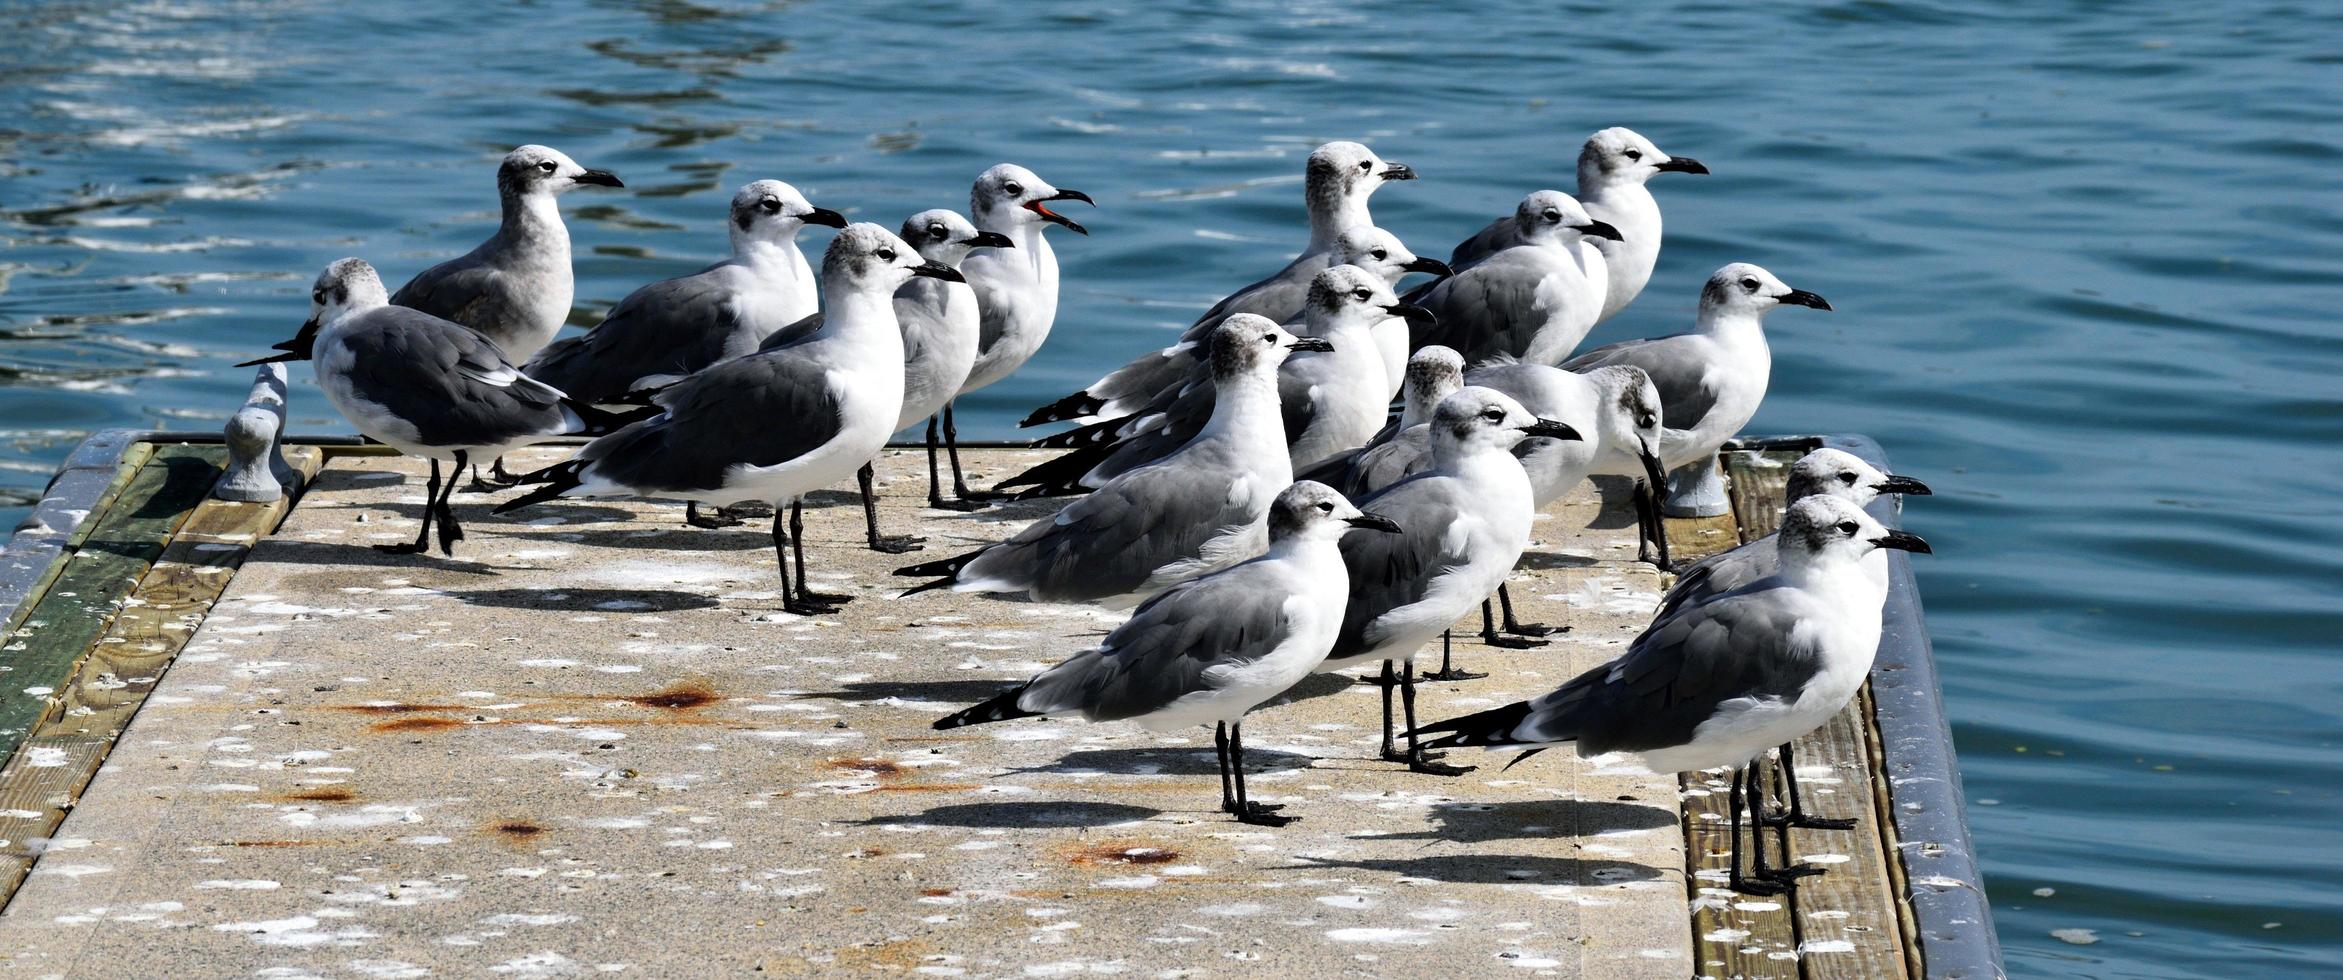 gaivotas na água foto